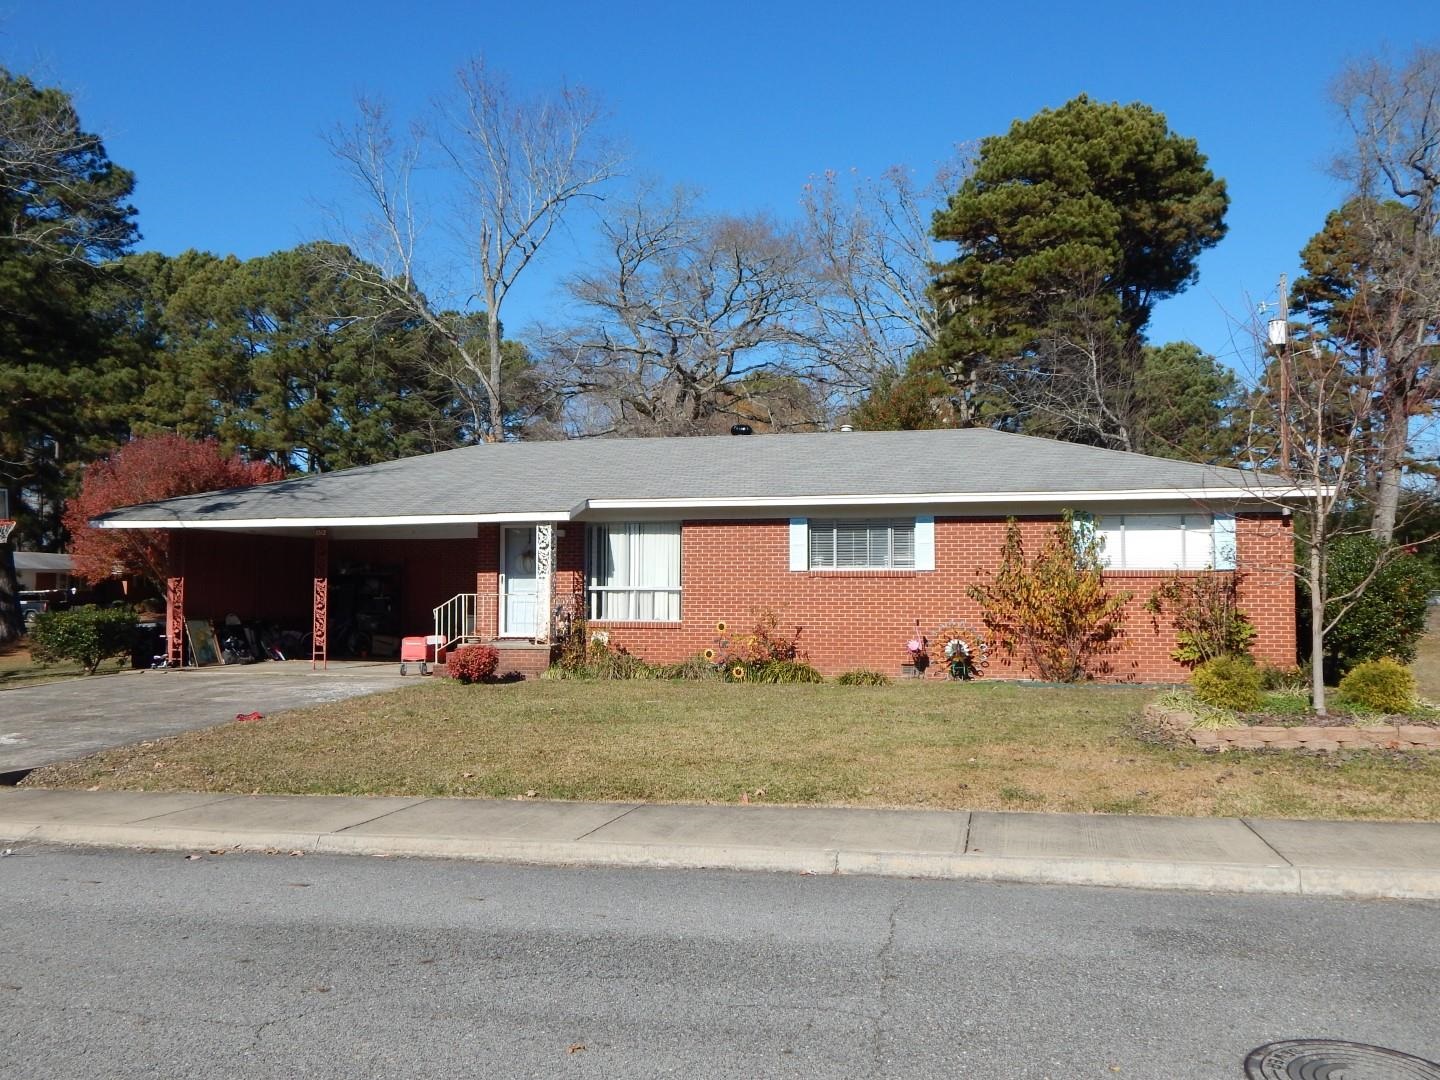 Residential for sale – 1512 W Pine   Heber Springs, AR